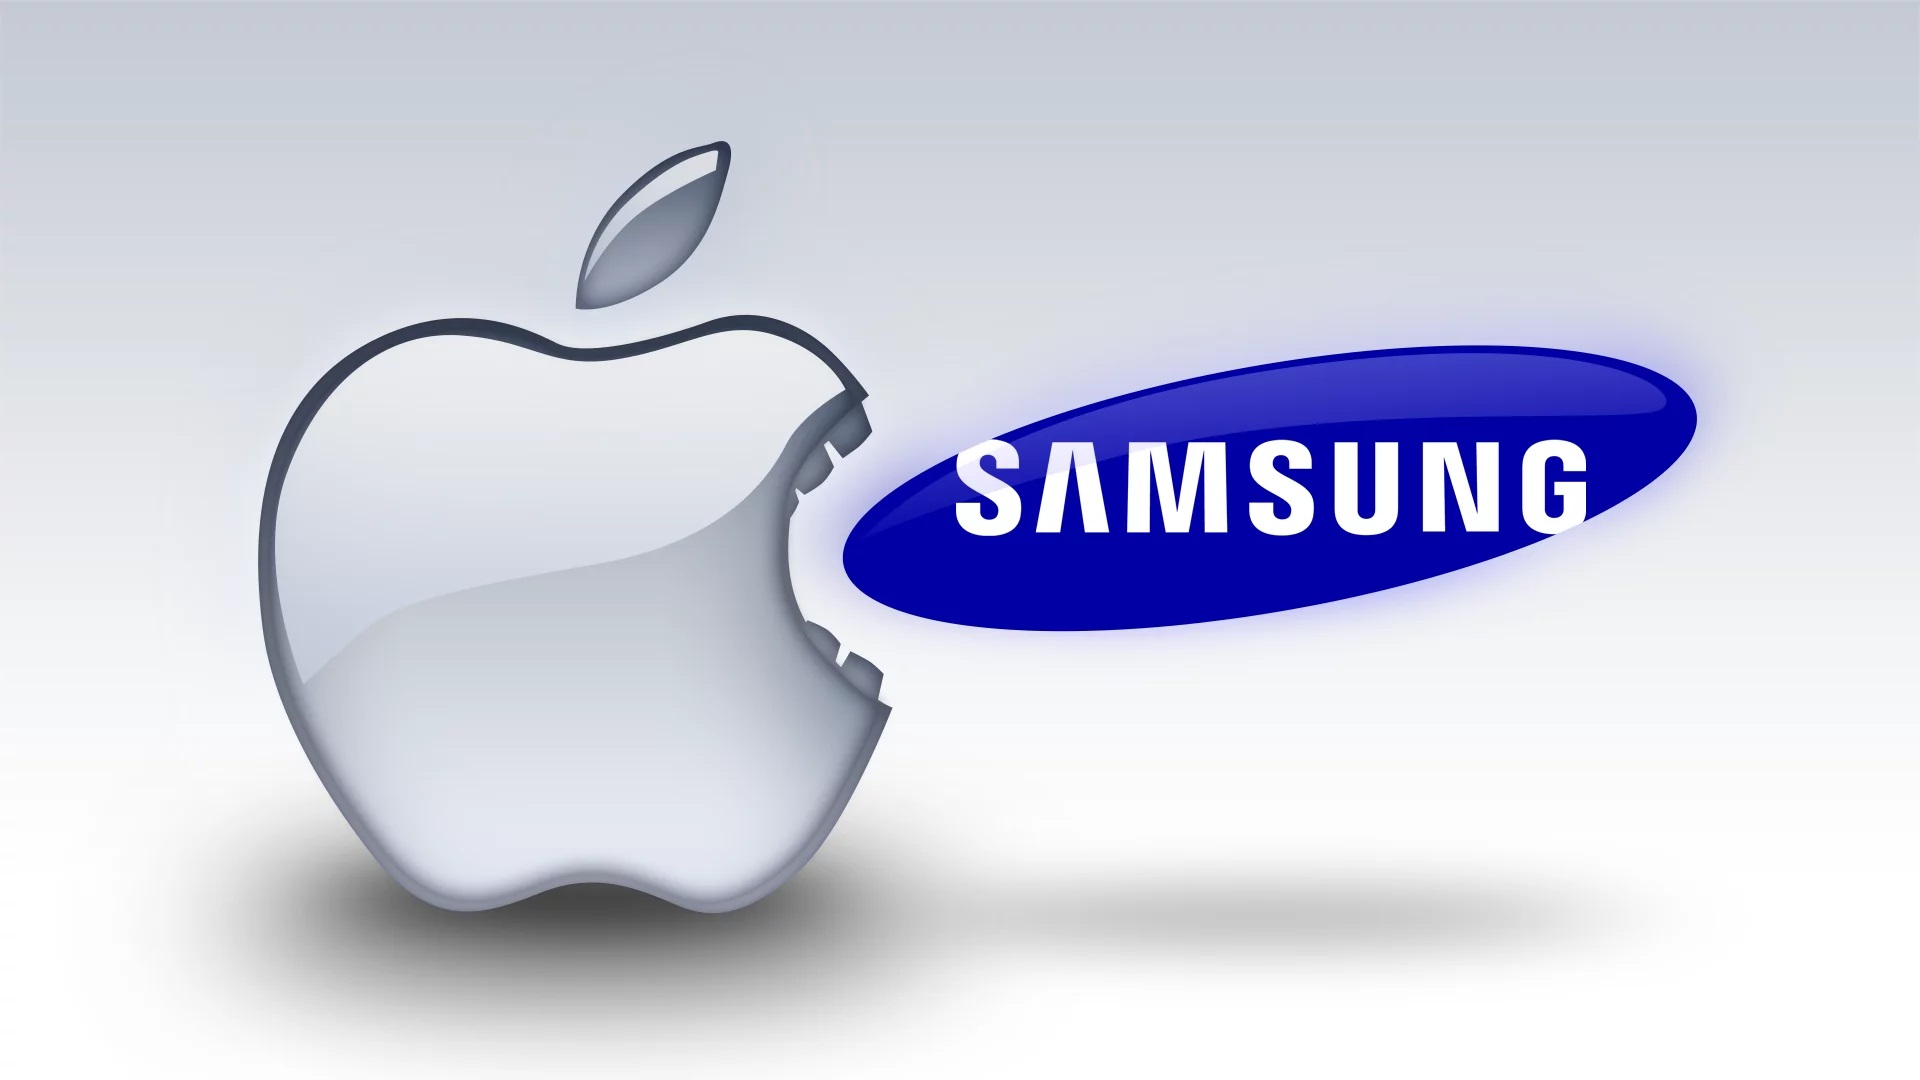 Apple is pulling past Samsung again